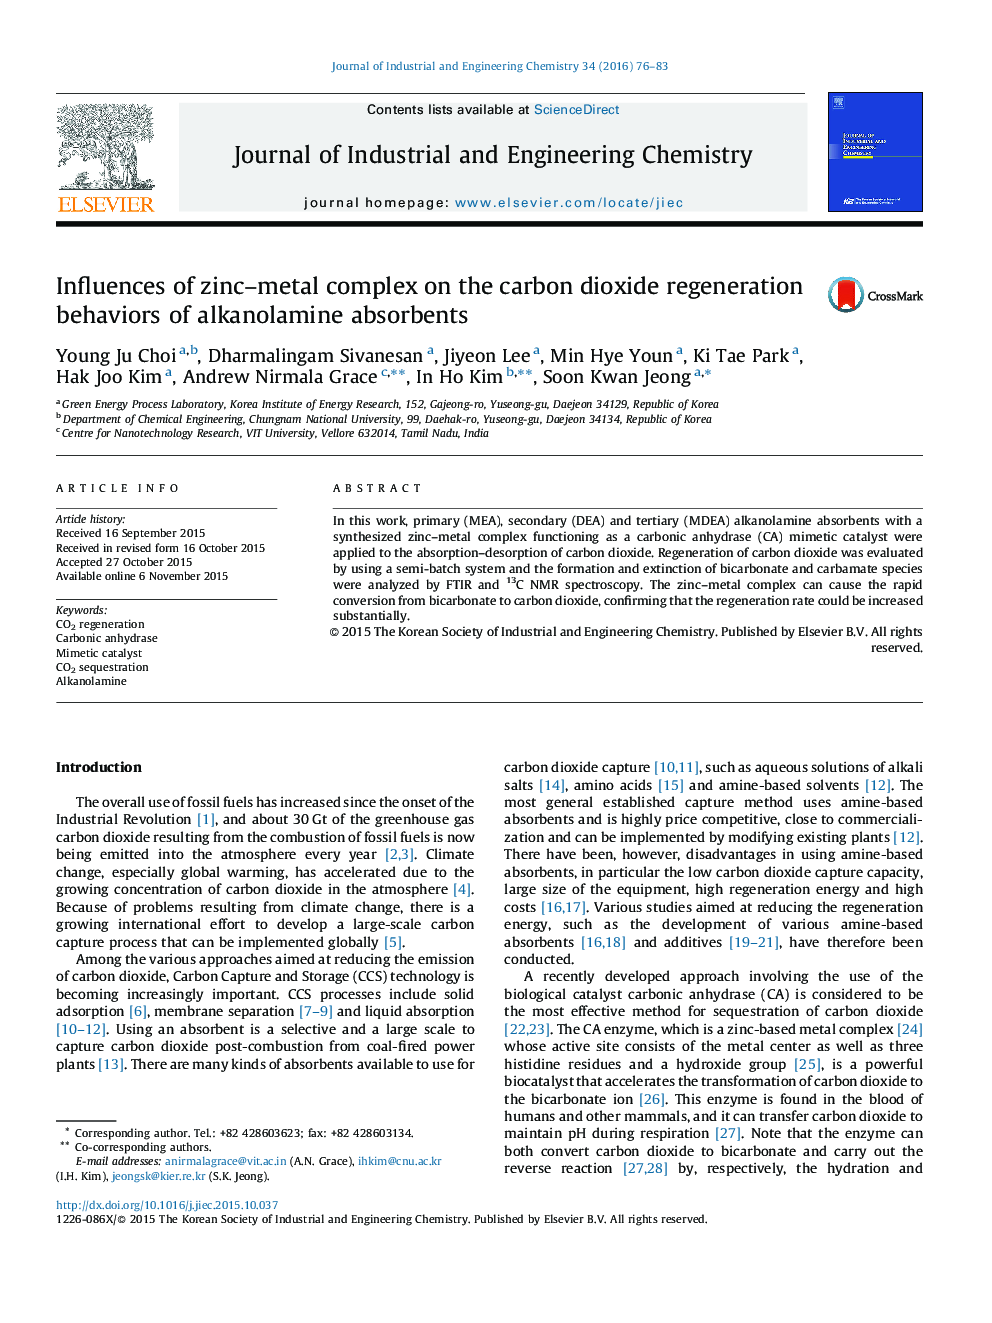 Influences of zinc–metal complex on the carbon dioxide regeneration behaviors of alkanolamine absorbents